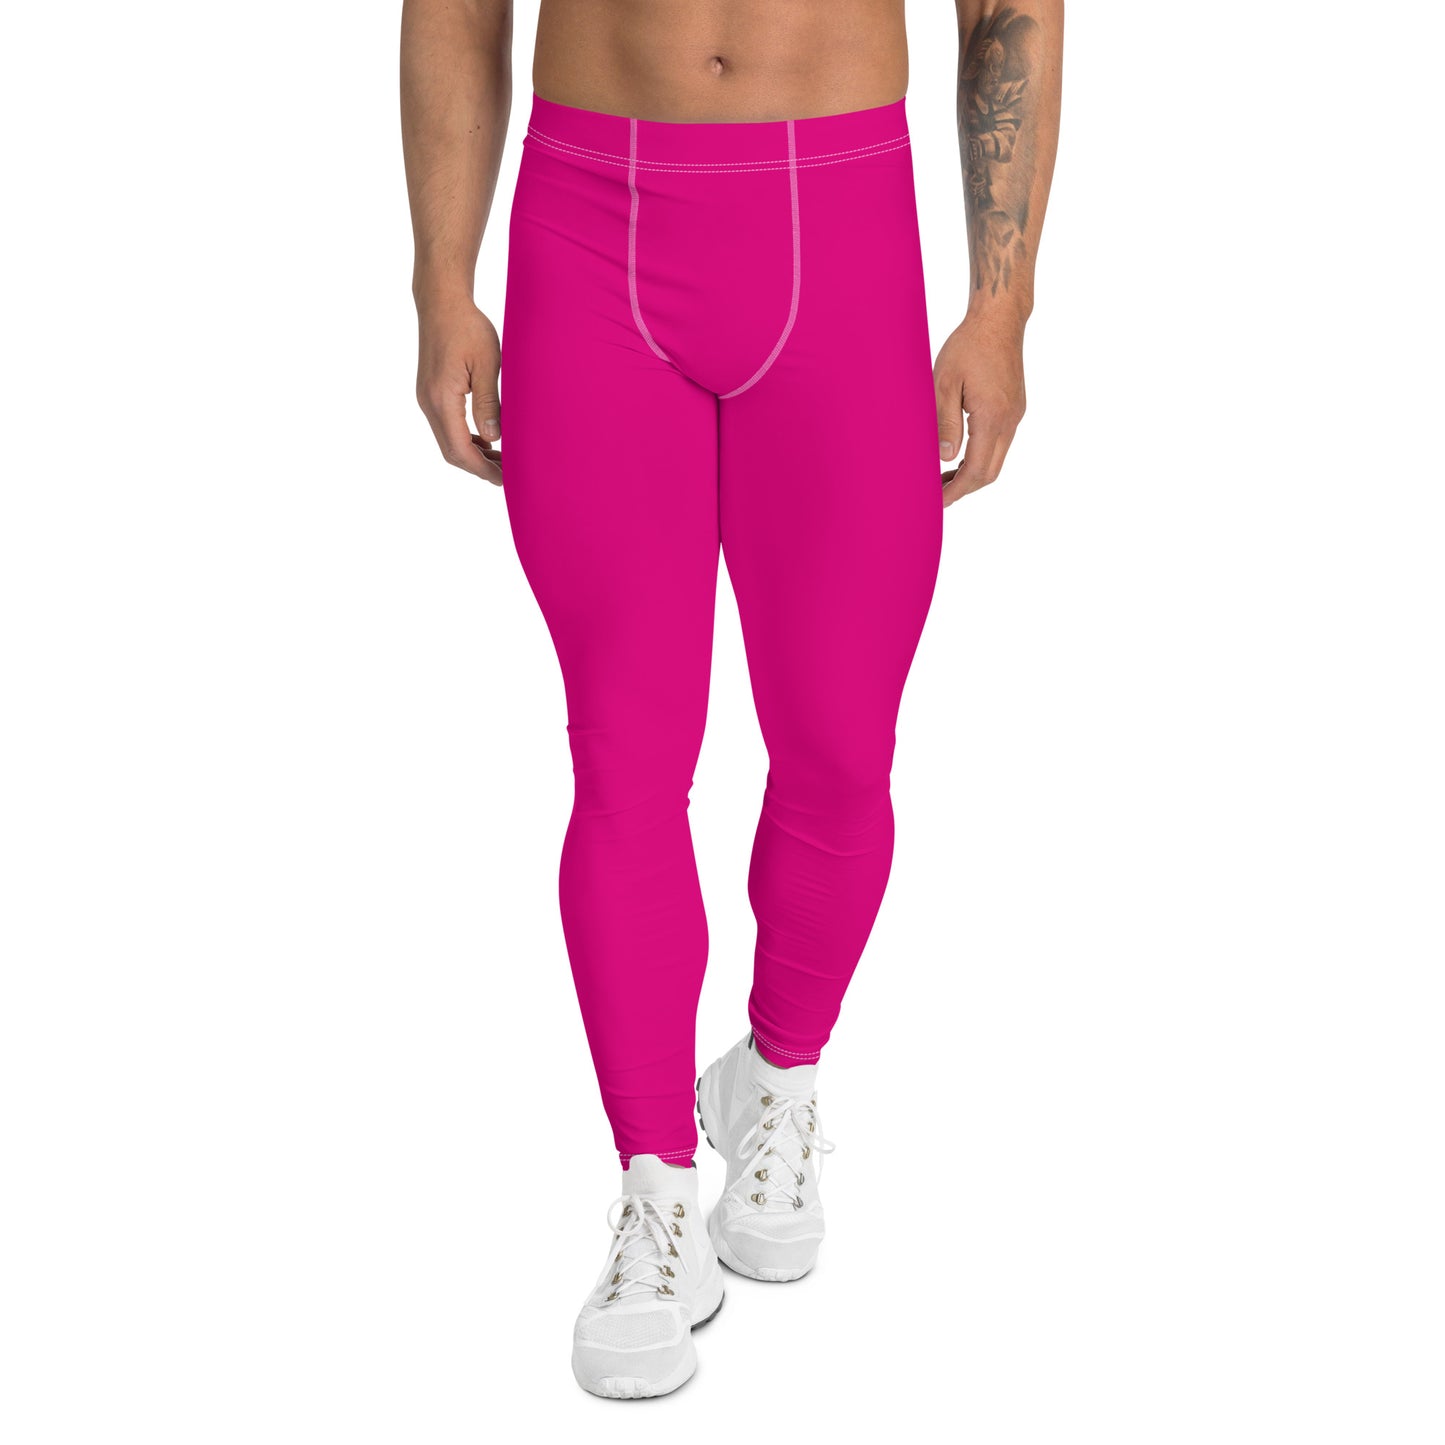 Men's Athletic Leggings (Hot Pink)